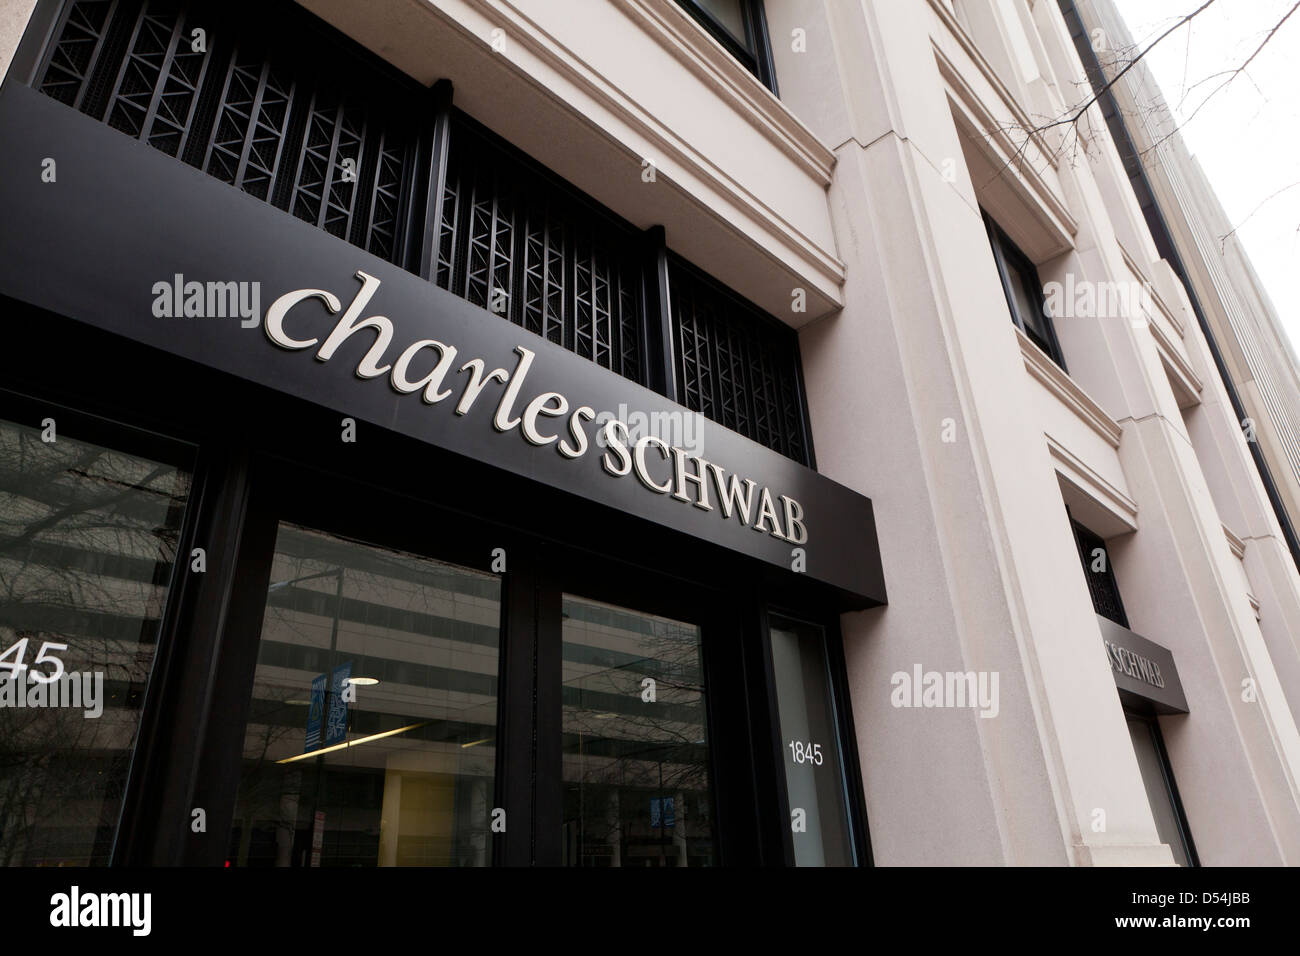 Charles Schwab building - Washington, DC USA Banque D'Images